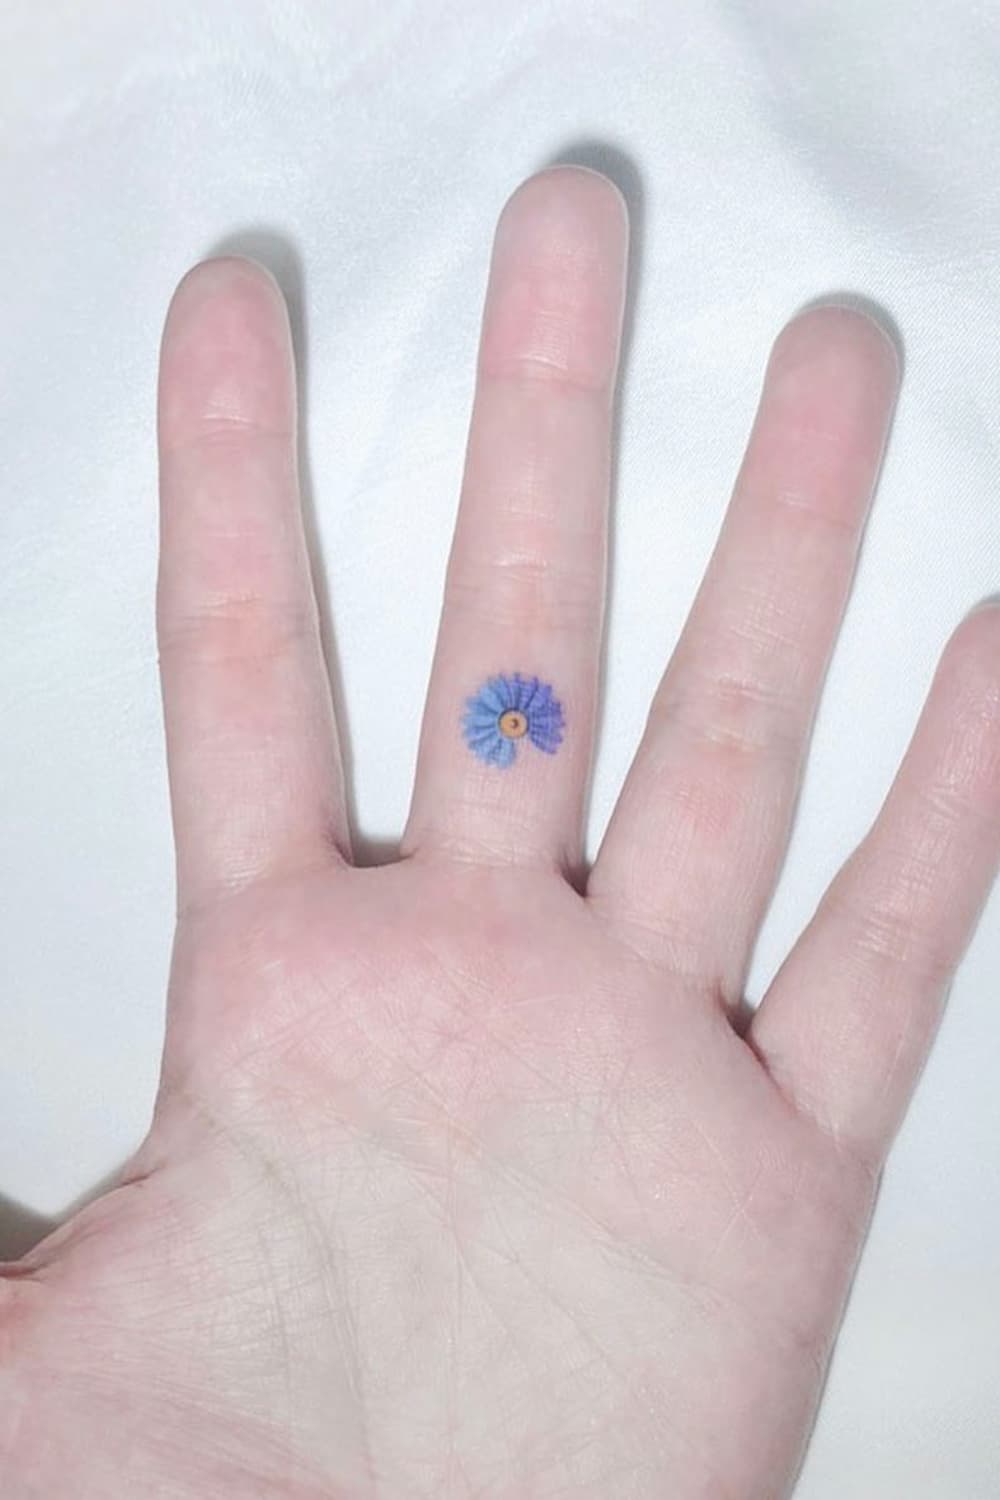 Cute Small Blue Daisy Tattoo